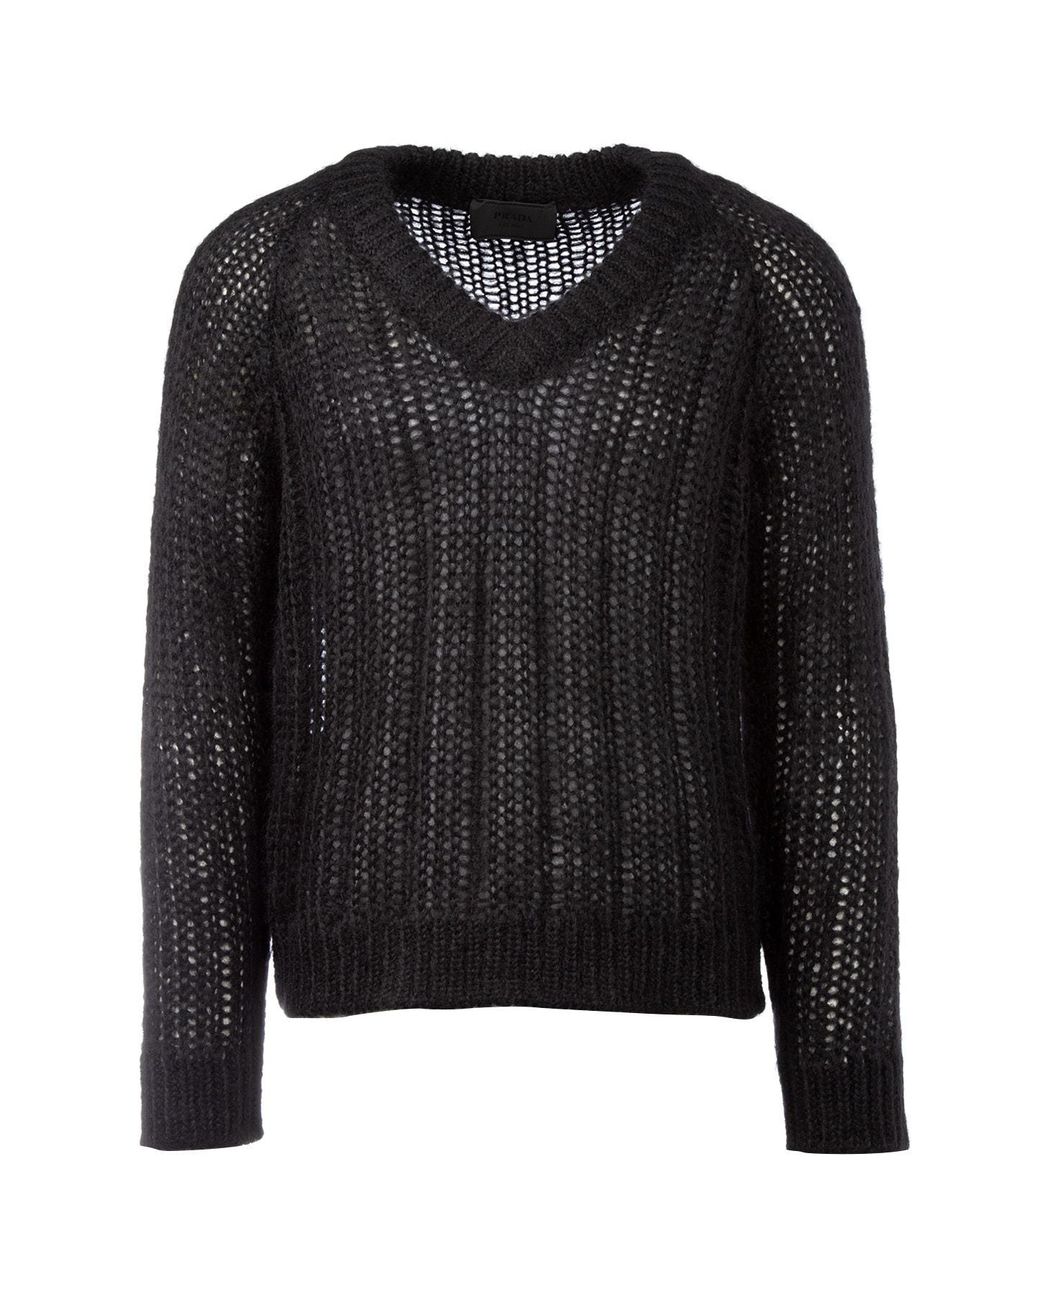 Prada Synthetic Knitted V-neck Sweater in Black for Men - Lyst